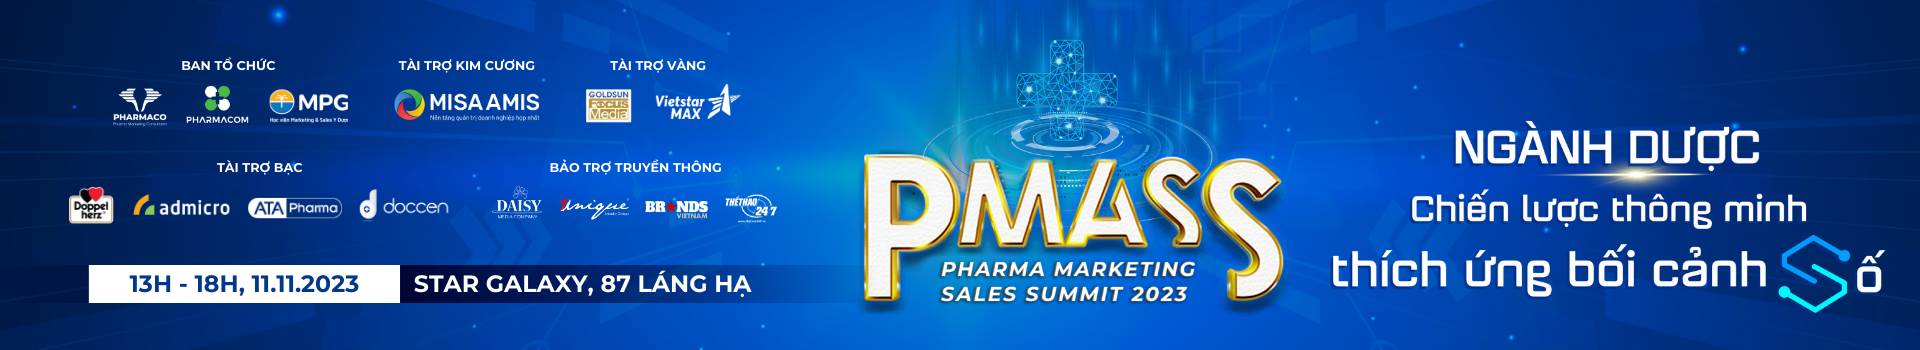 PMASS -  Pharma Marketing & Sales Summit 2023